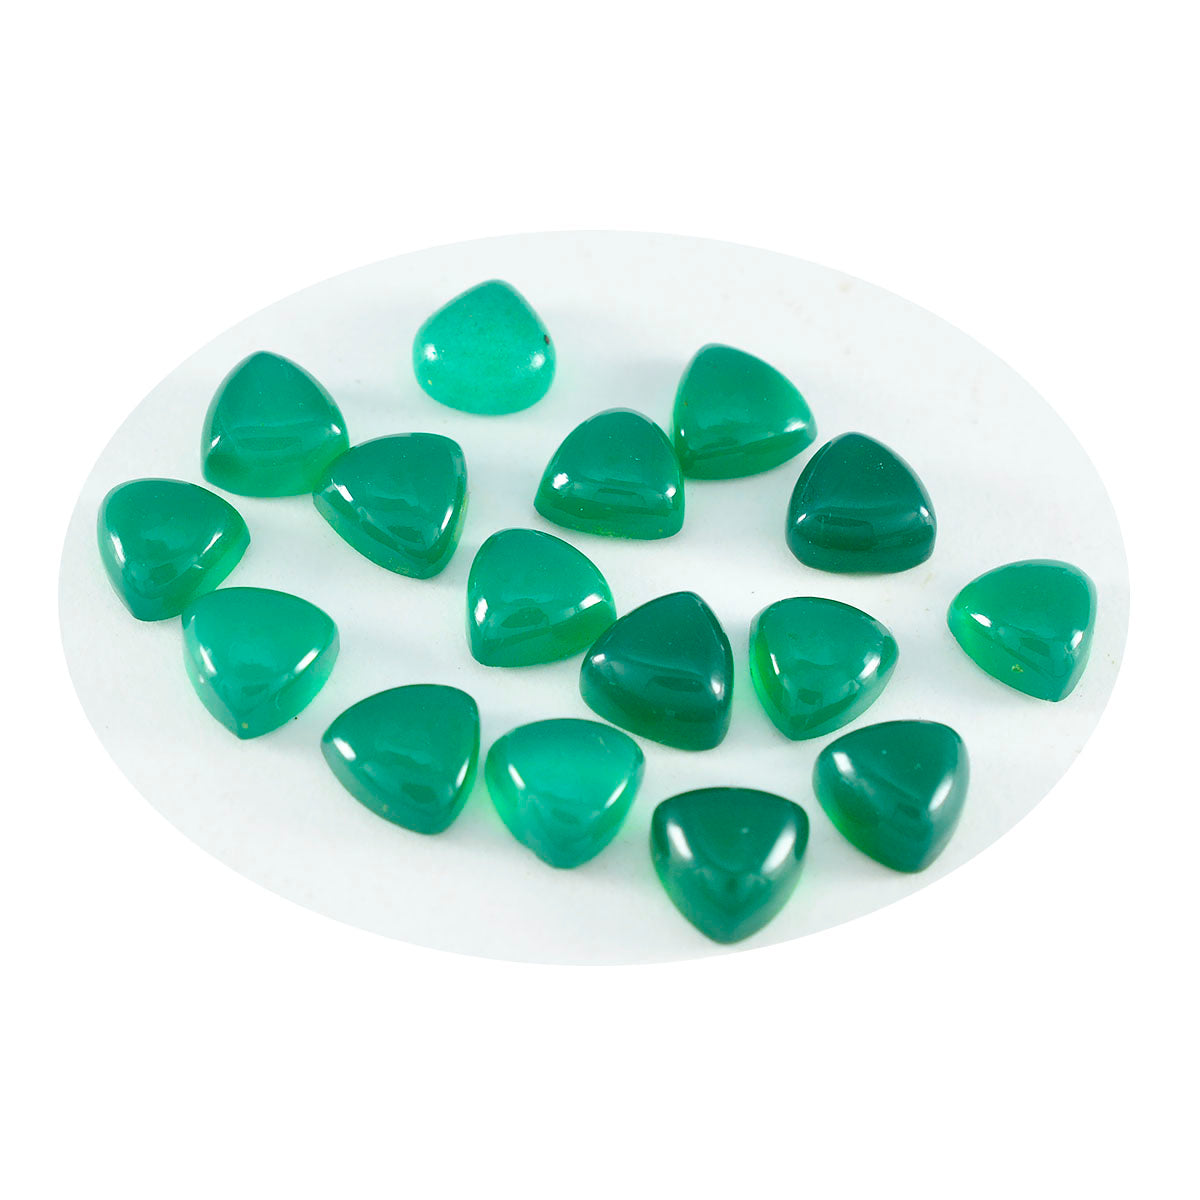 Riyogems 1PC Green Onyx Cabochon 7X7 mm Trillion Shape great Quality Stone